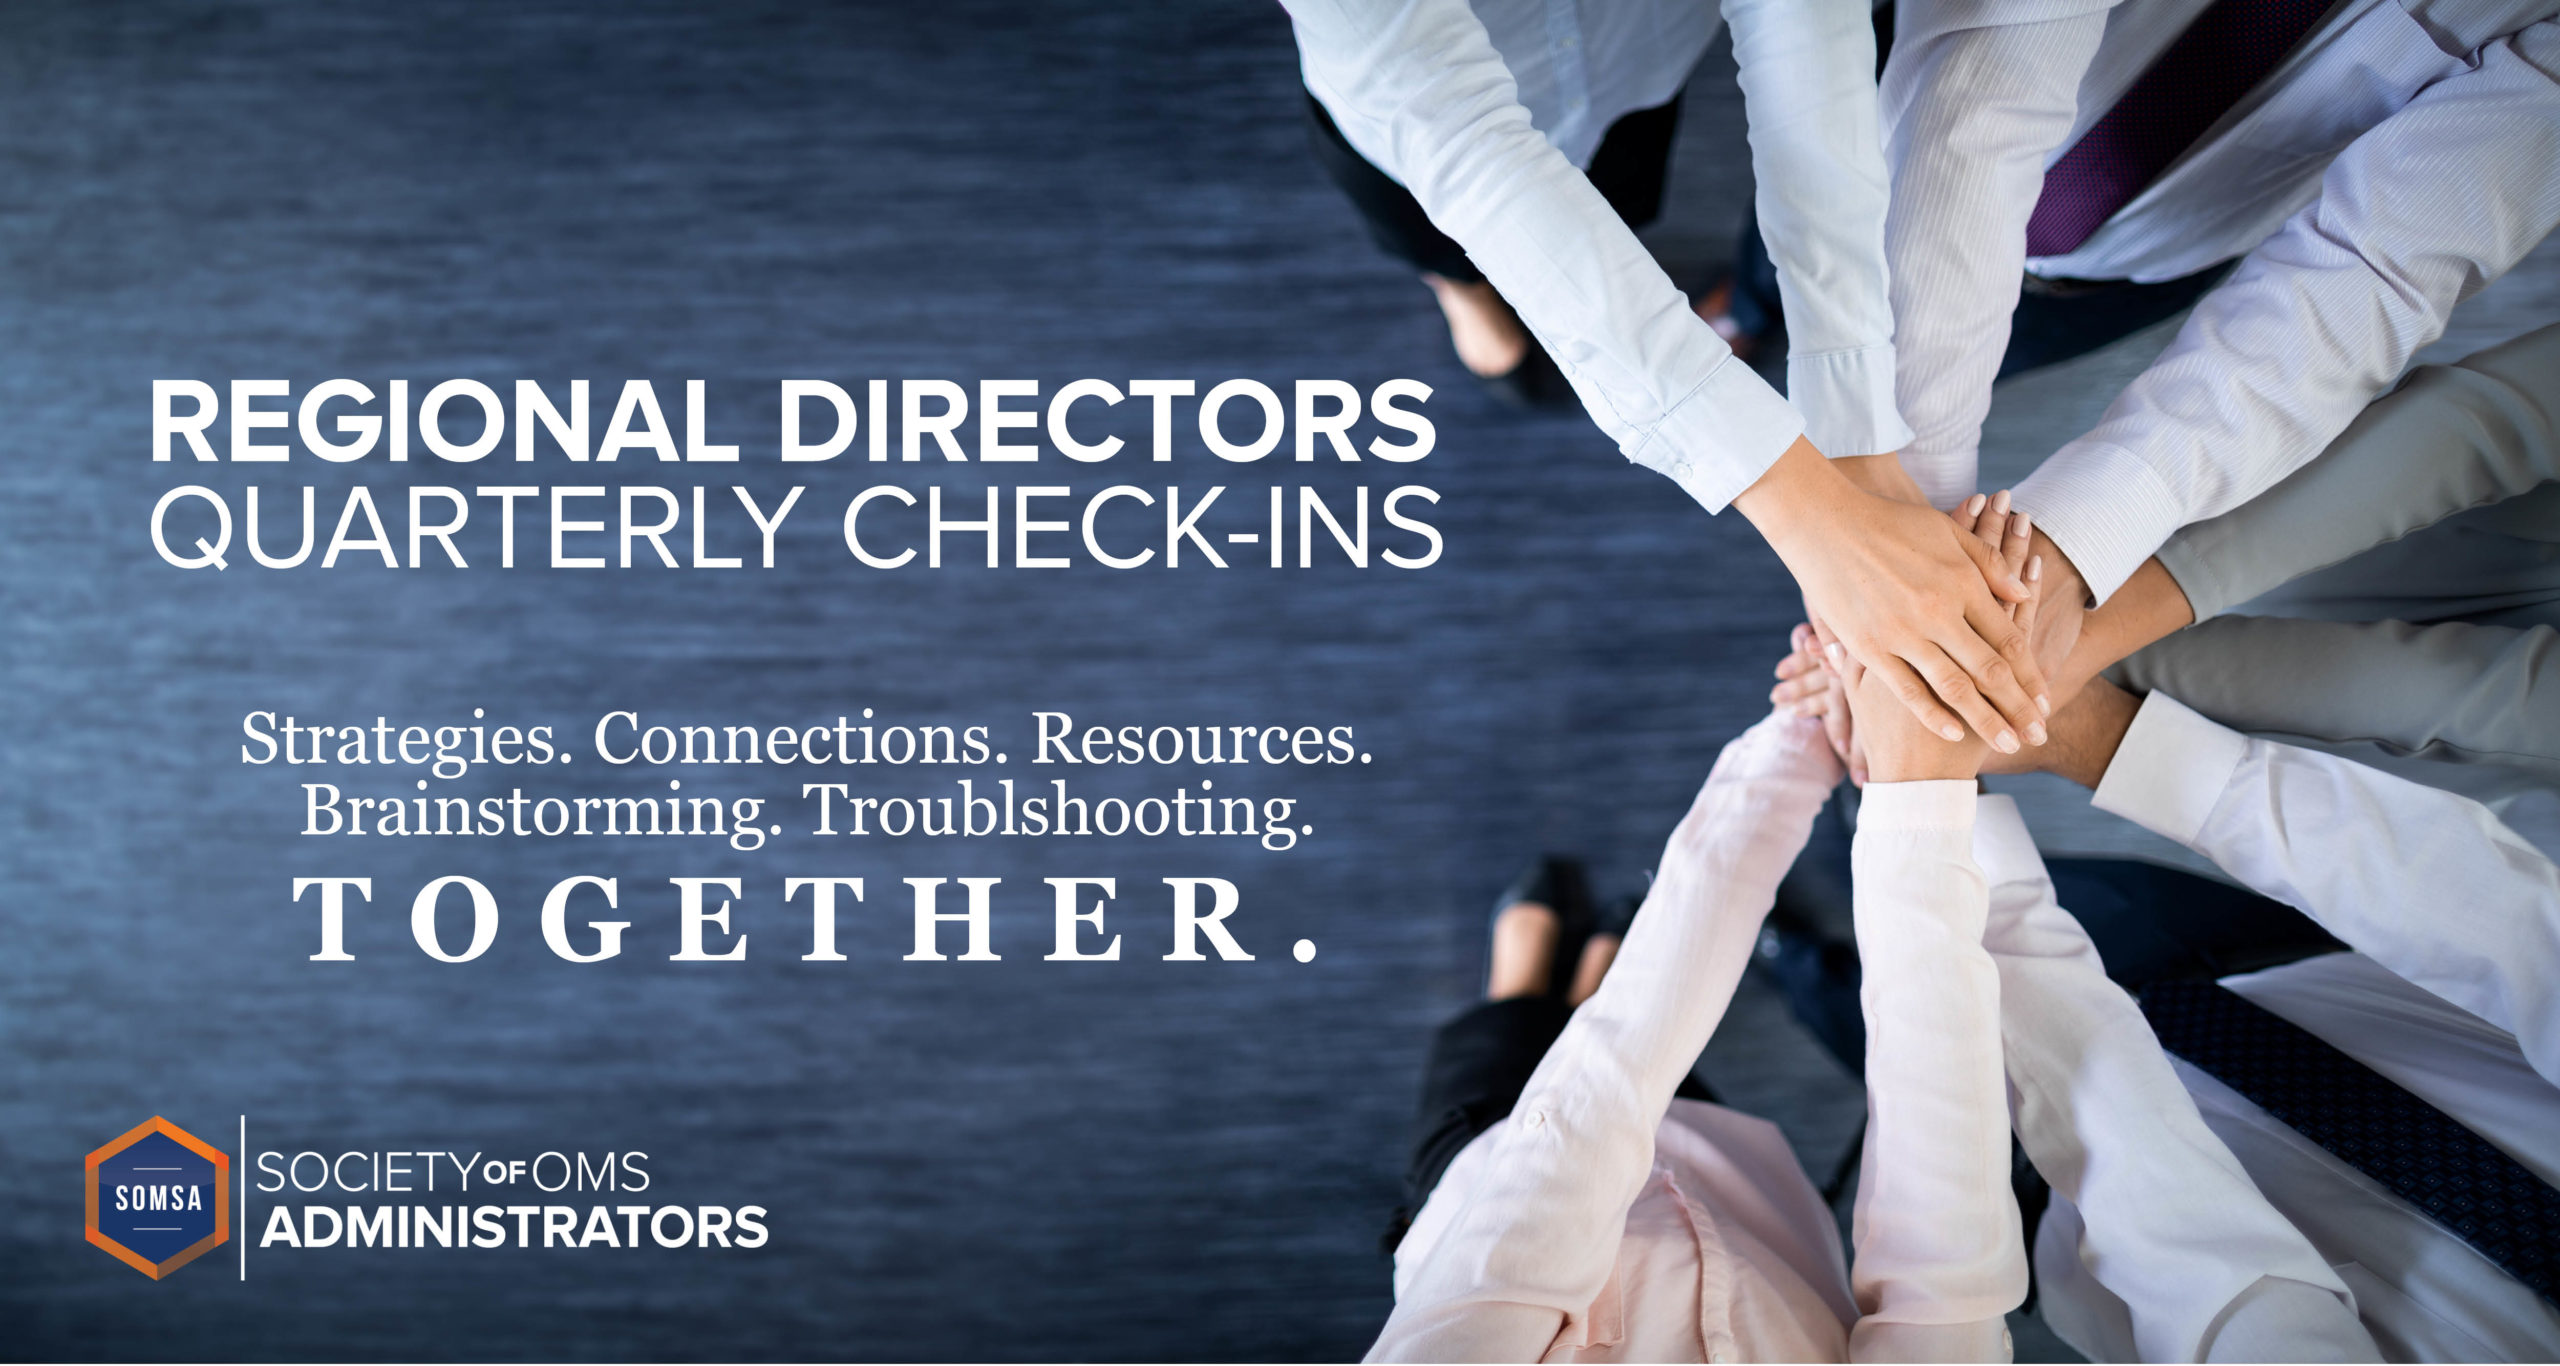 Regional Directors Quarterly Check-ins Banner